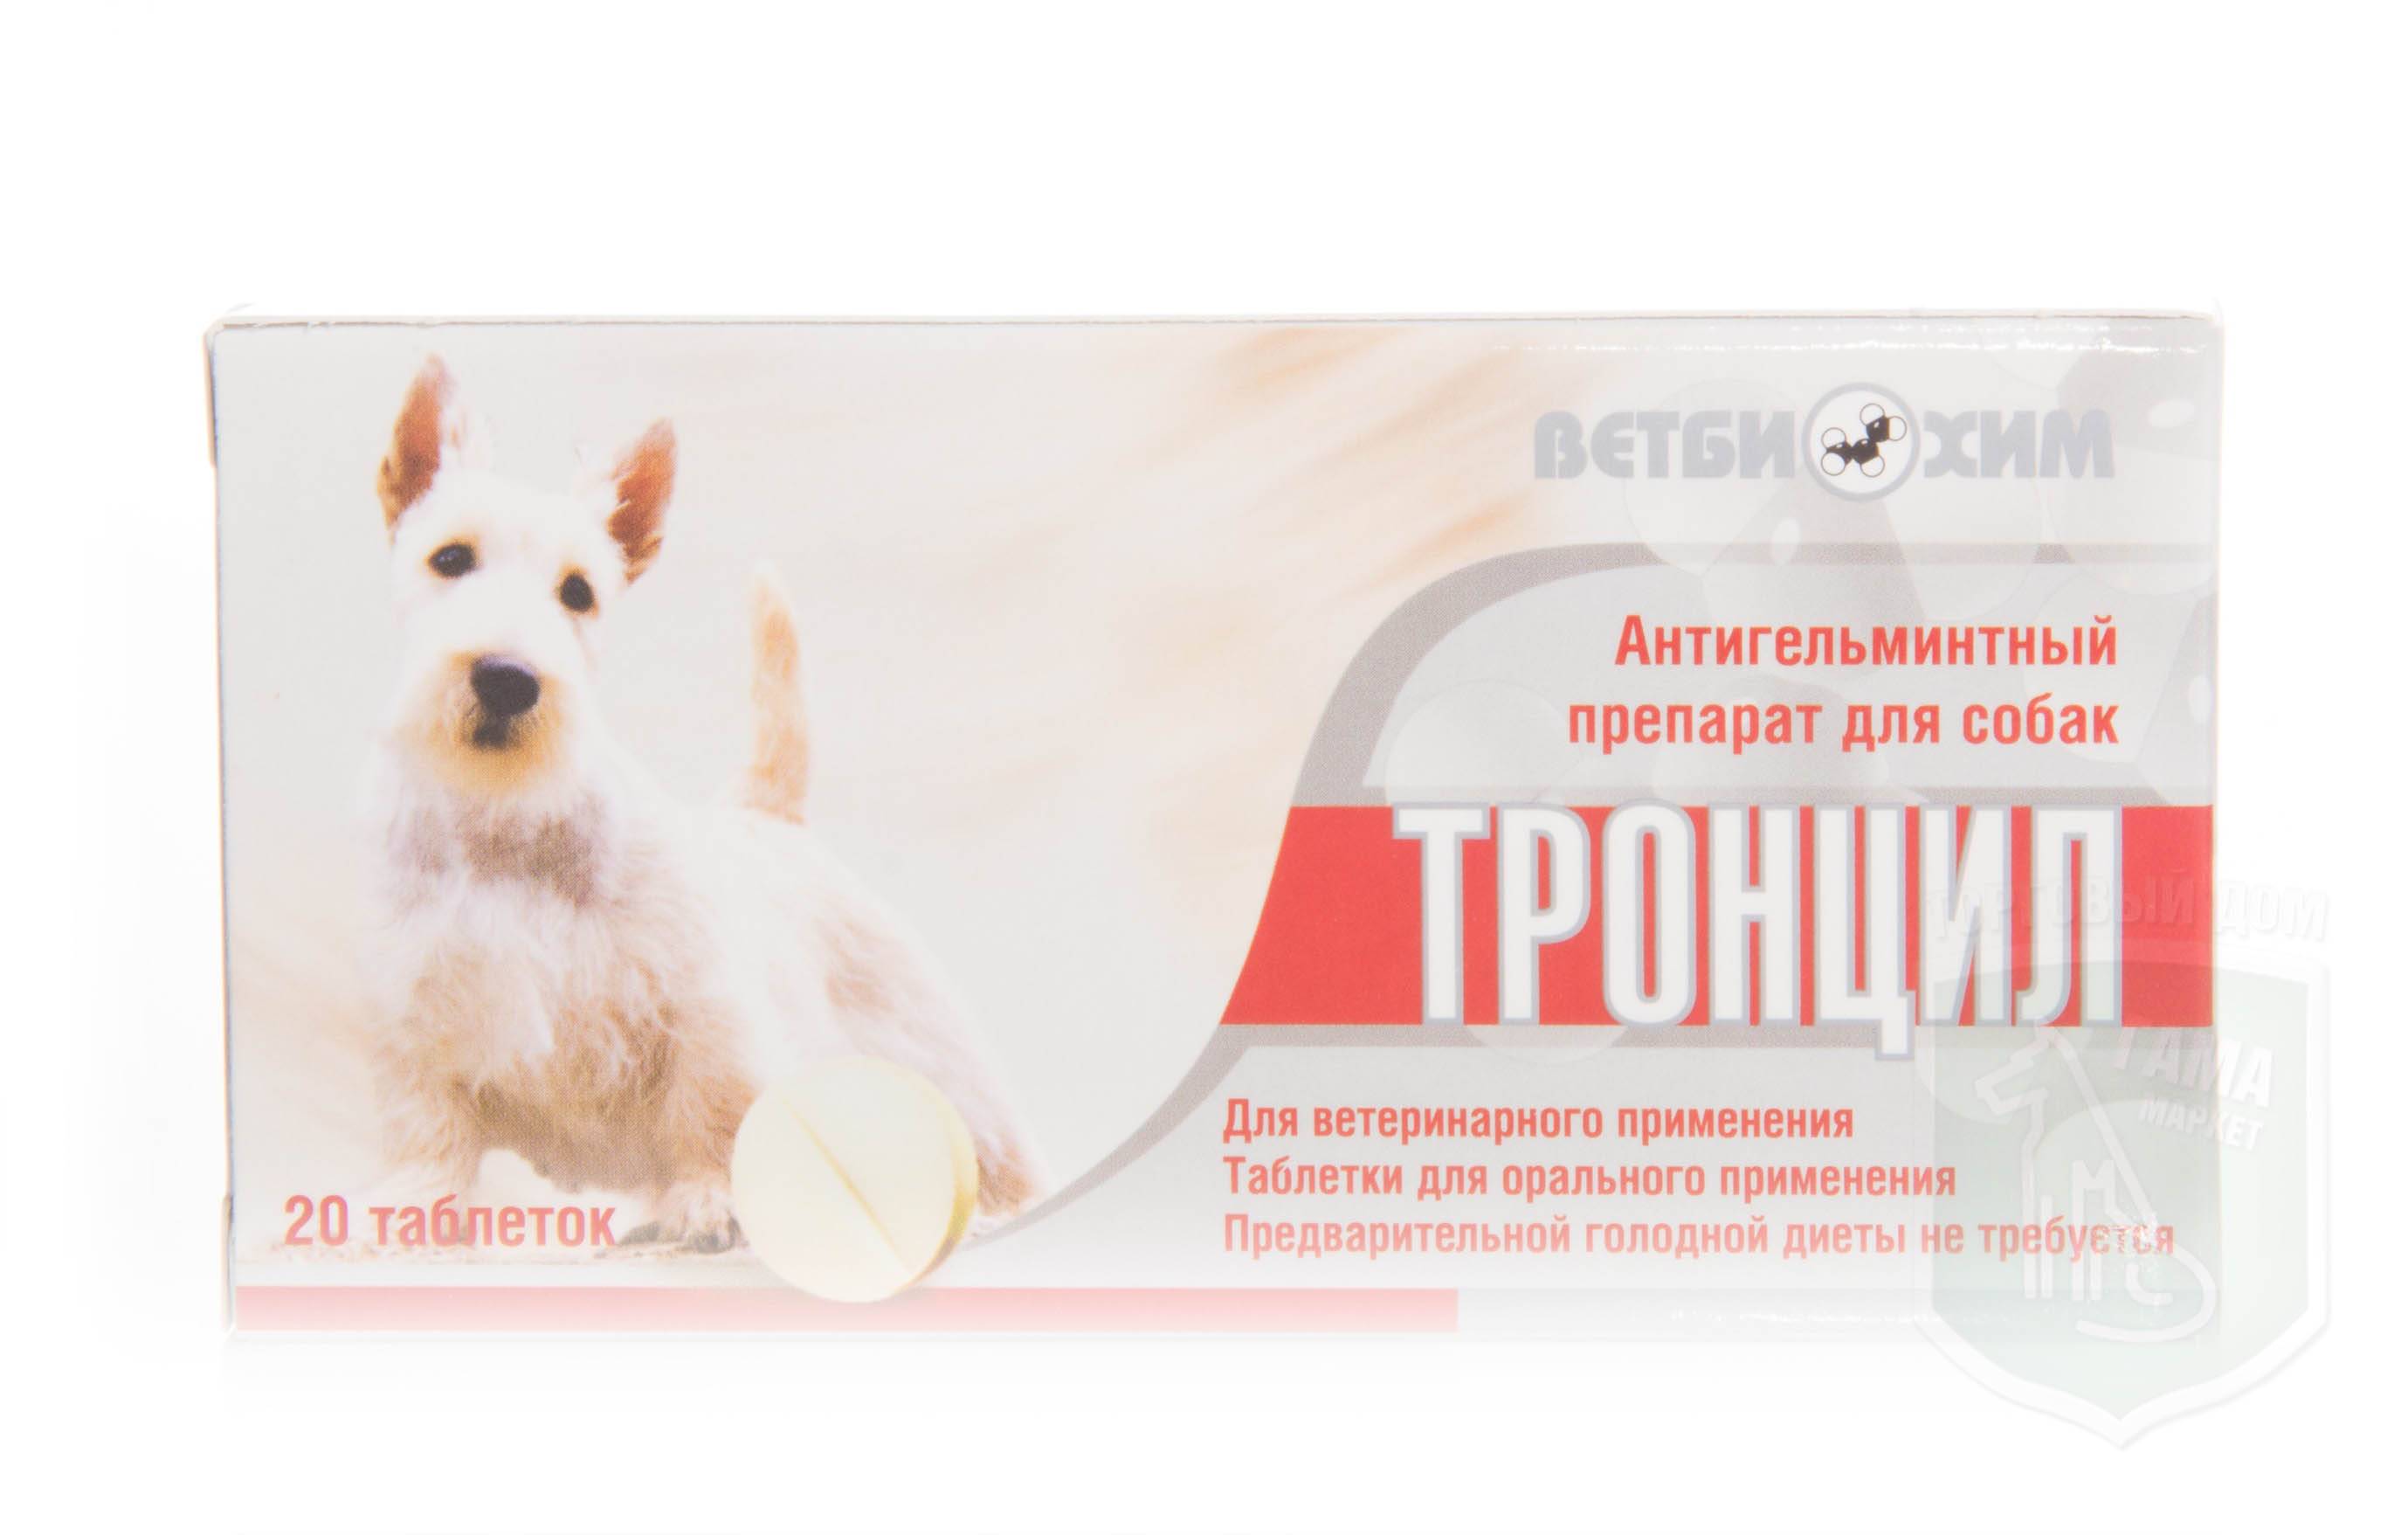 Тронцил для собак: доступно и эффективно